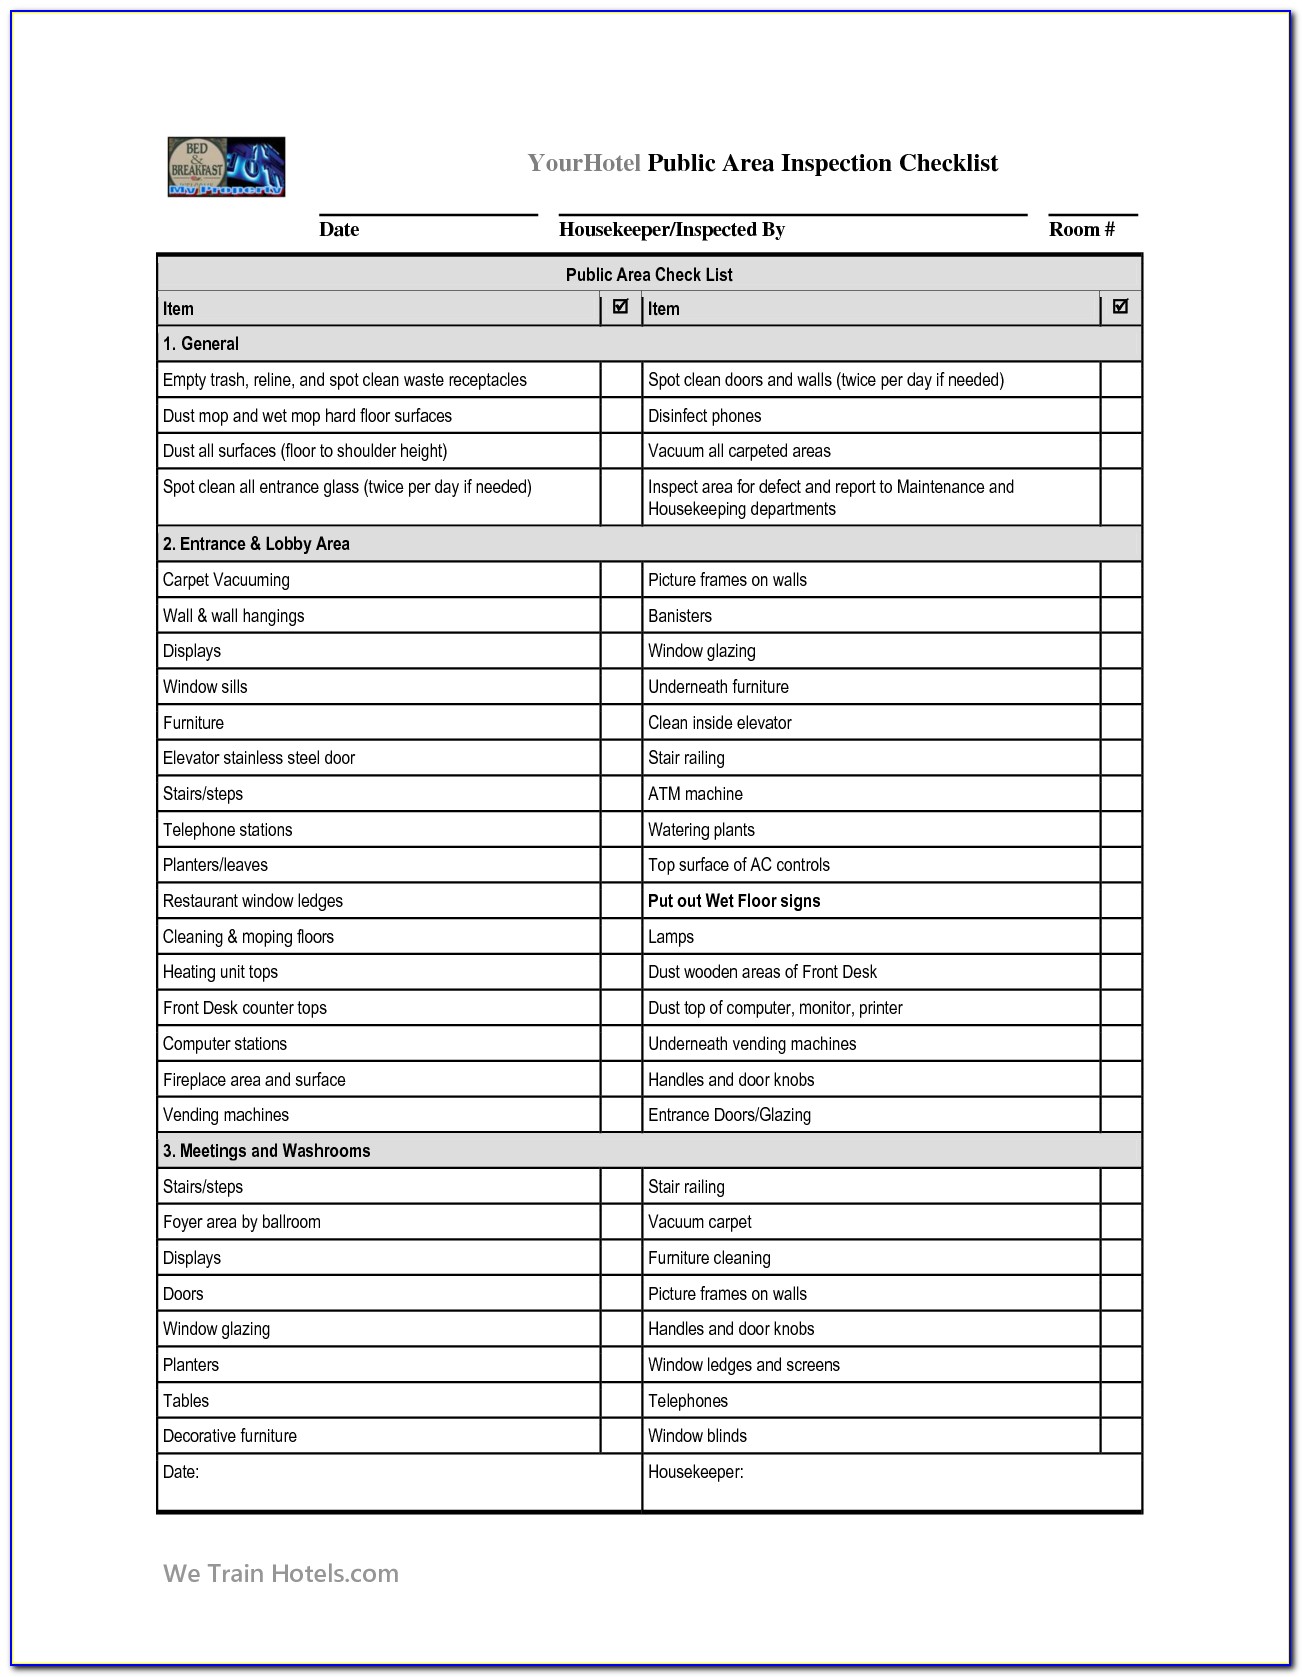 Hotel Preventive Maintenance Checklist Template